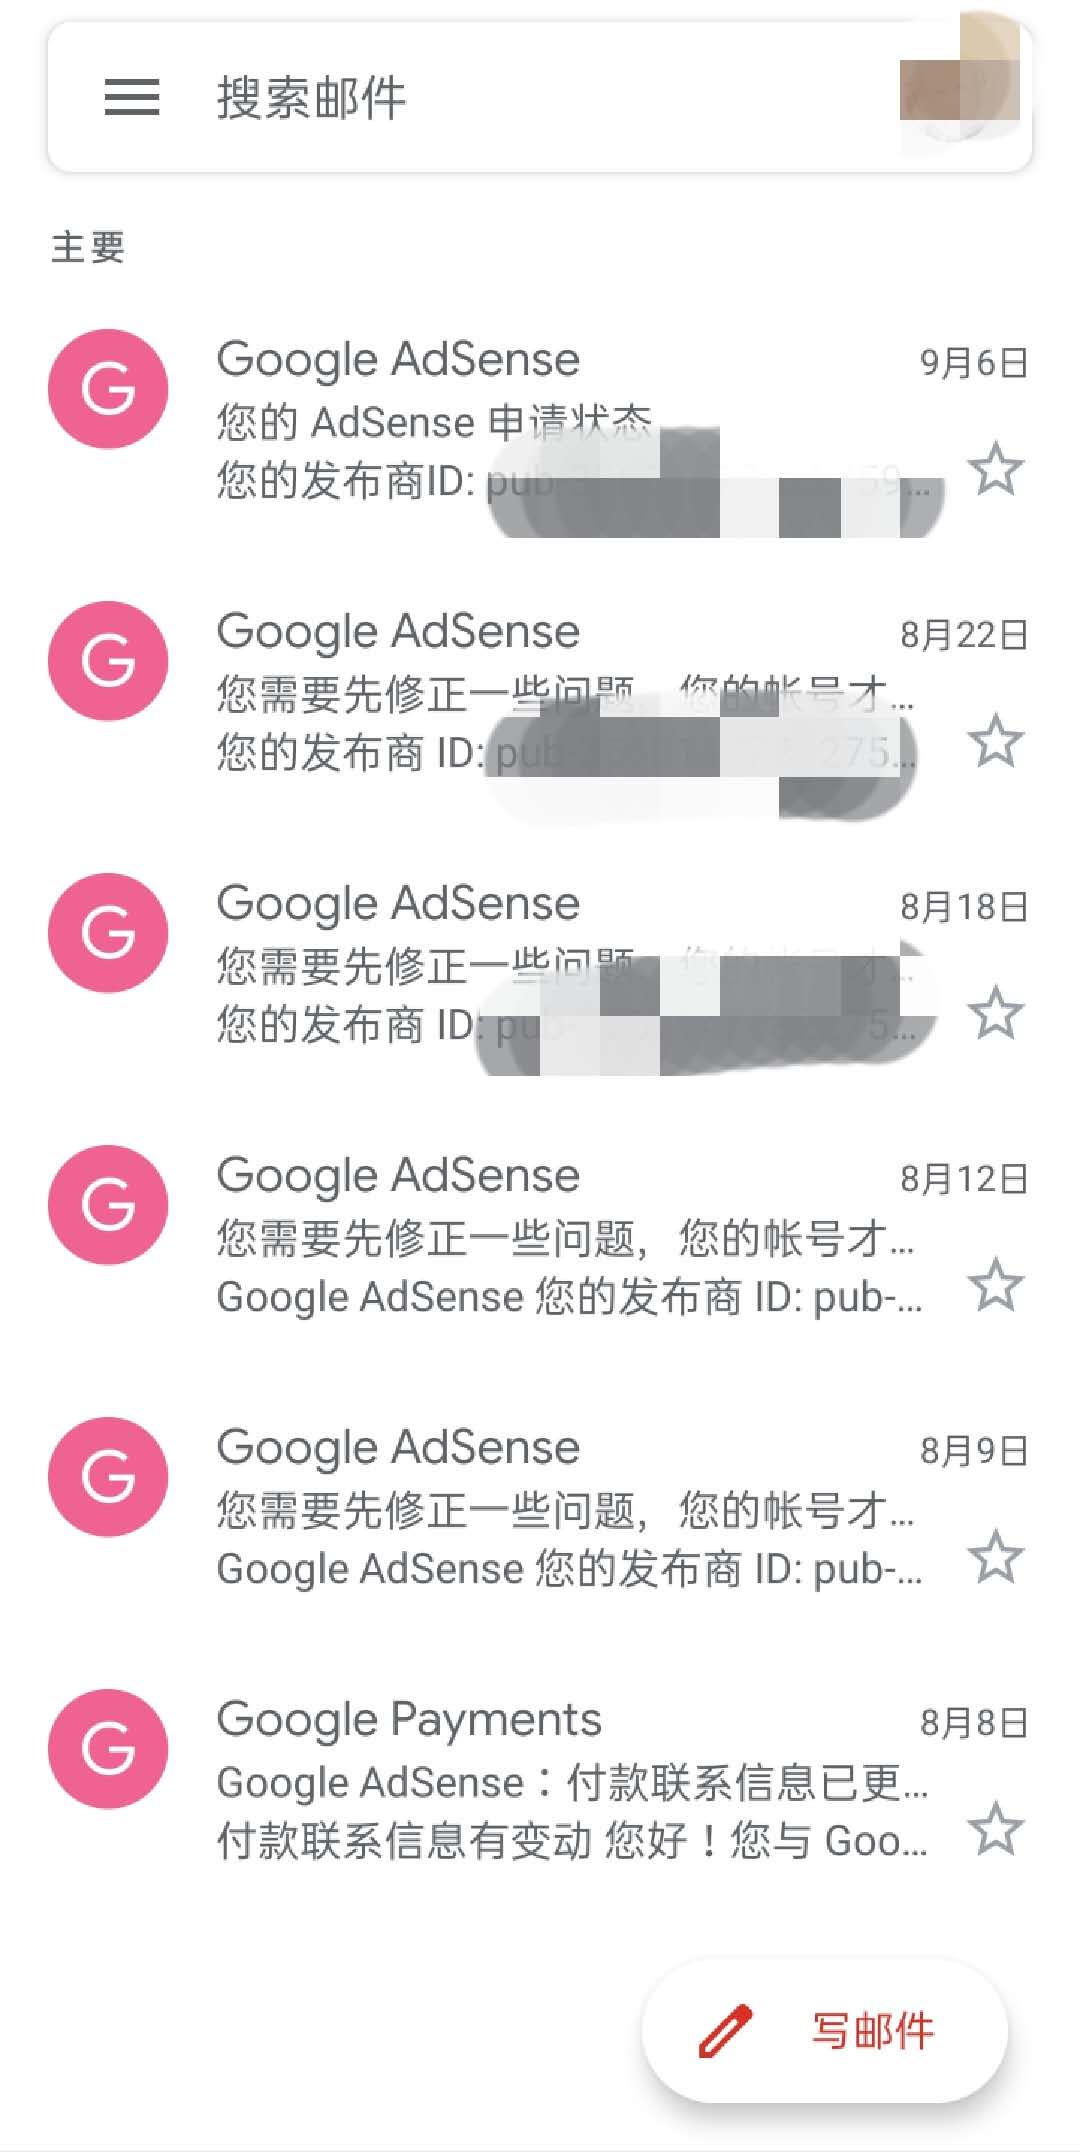 Google Adsense 第 5 次被拒绝 哭唧唧